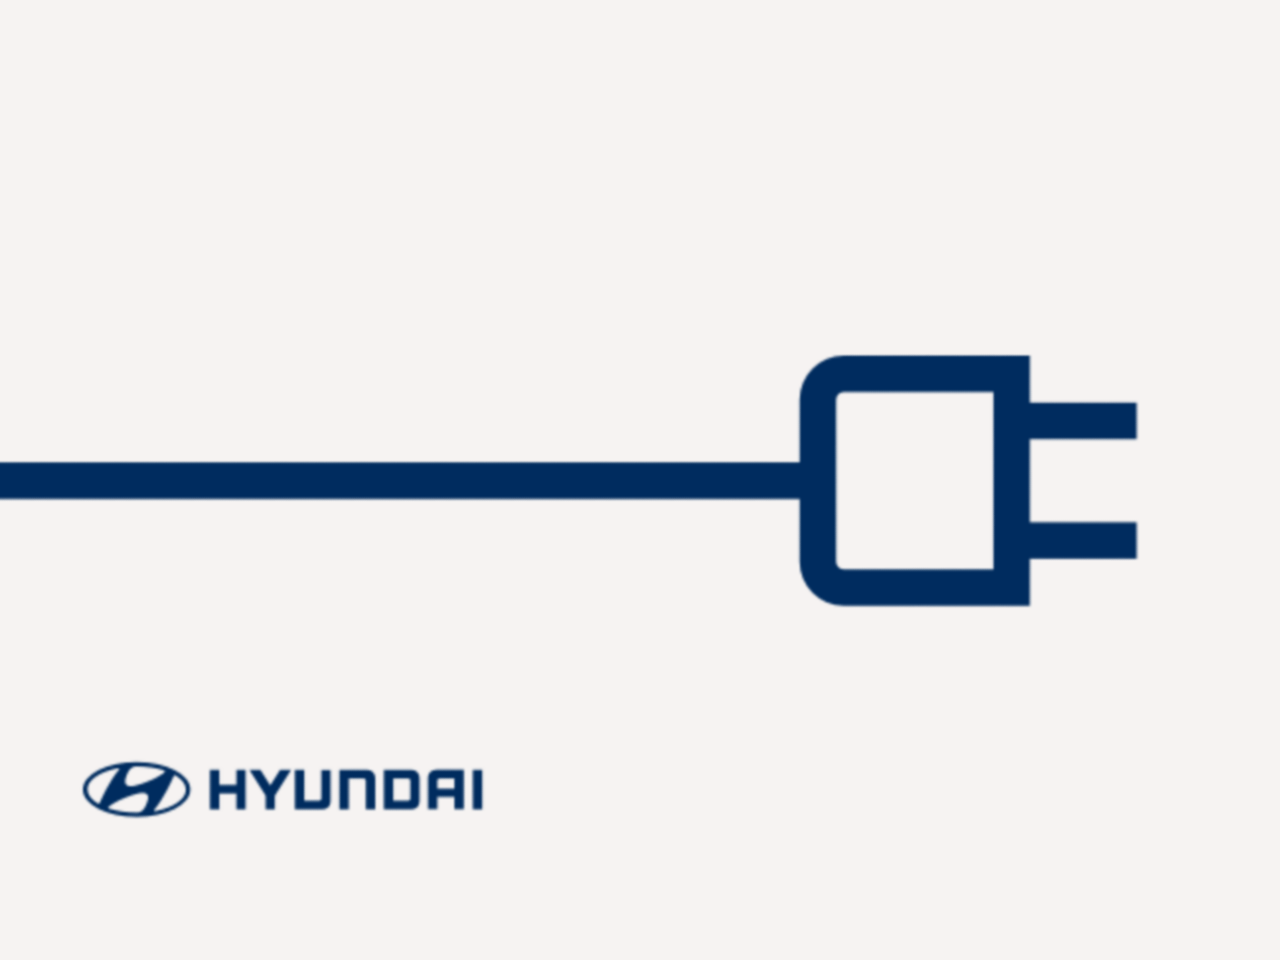 The Hyundai plug logo.